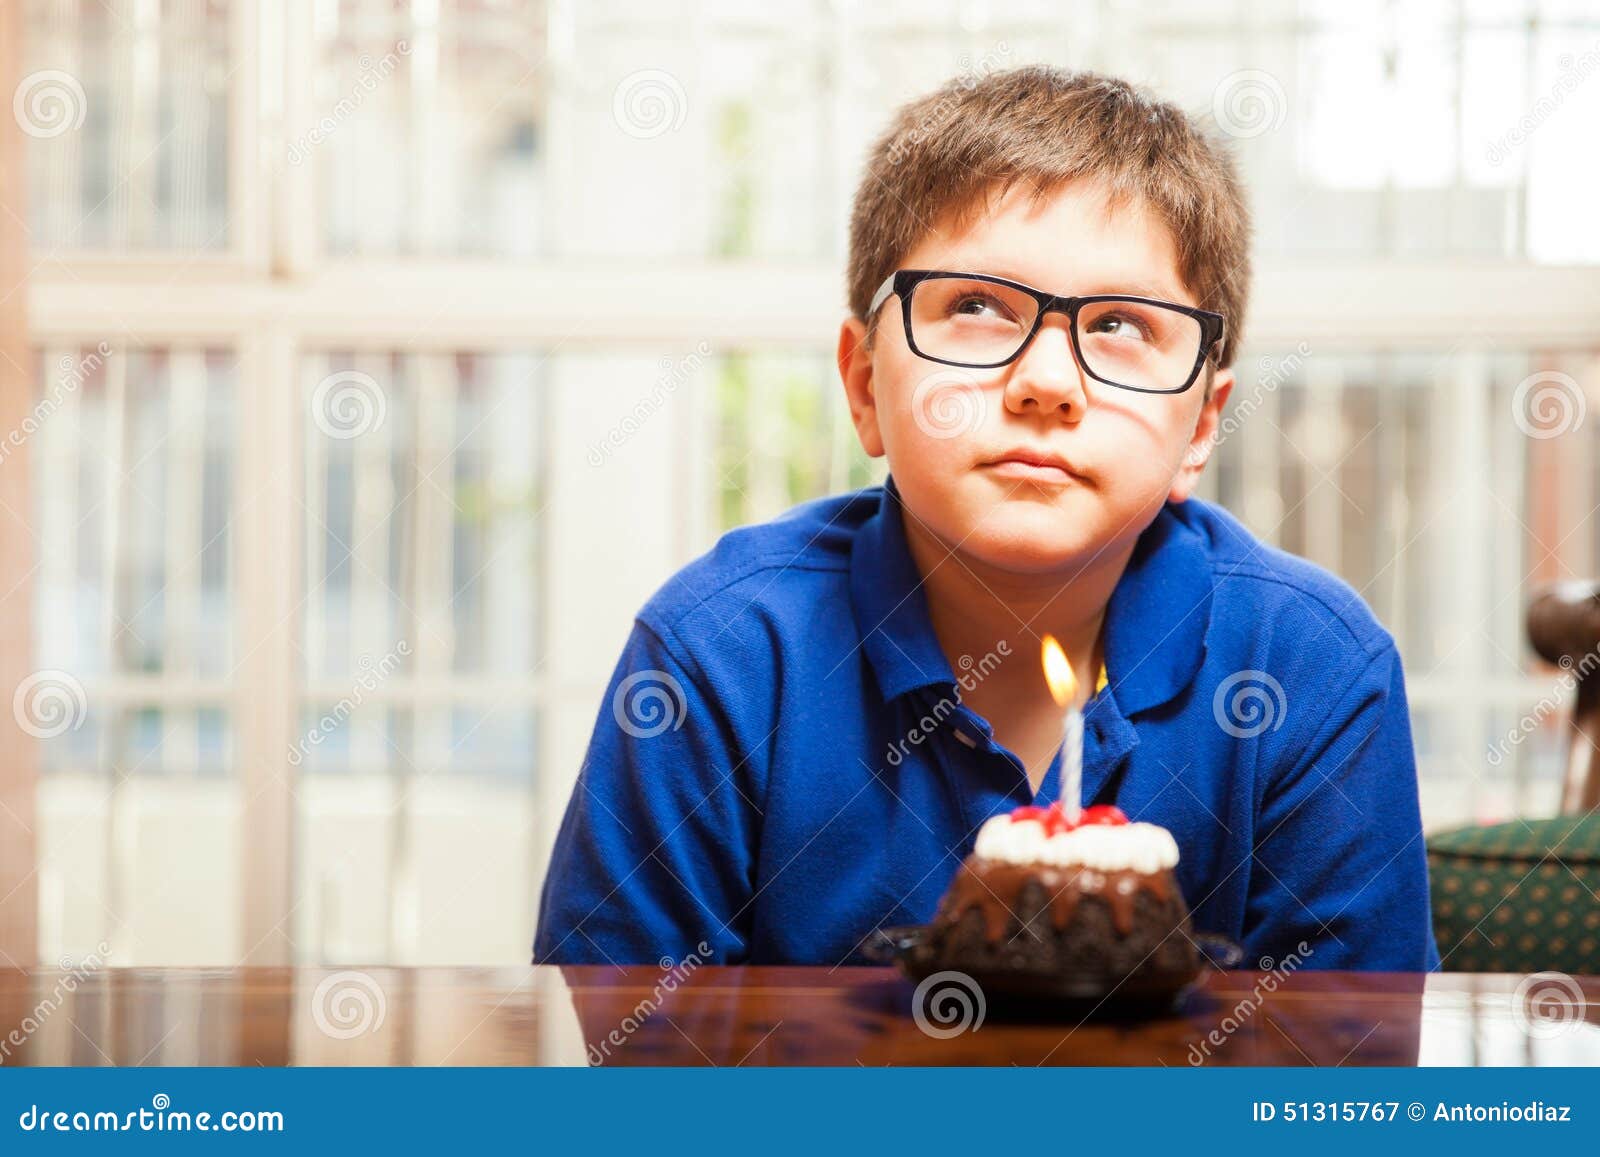 making a birthday wish